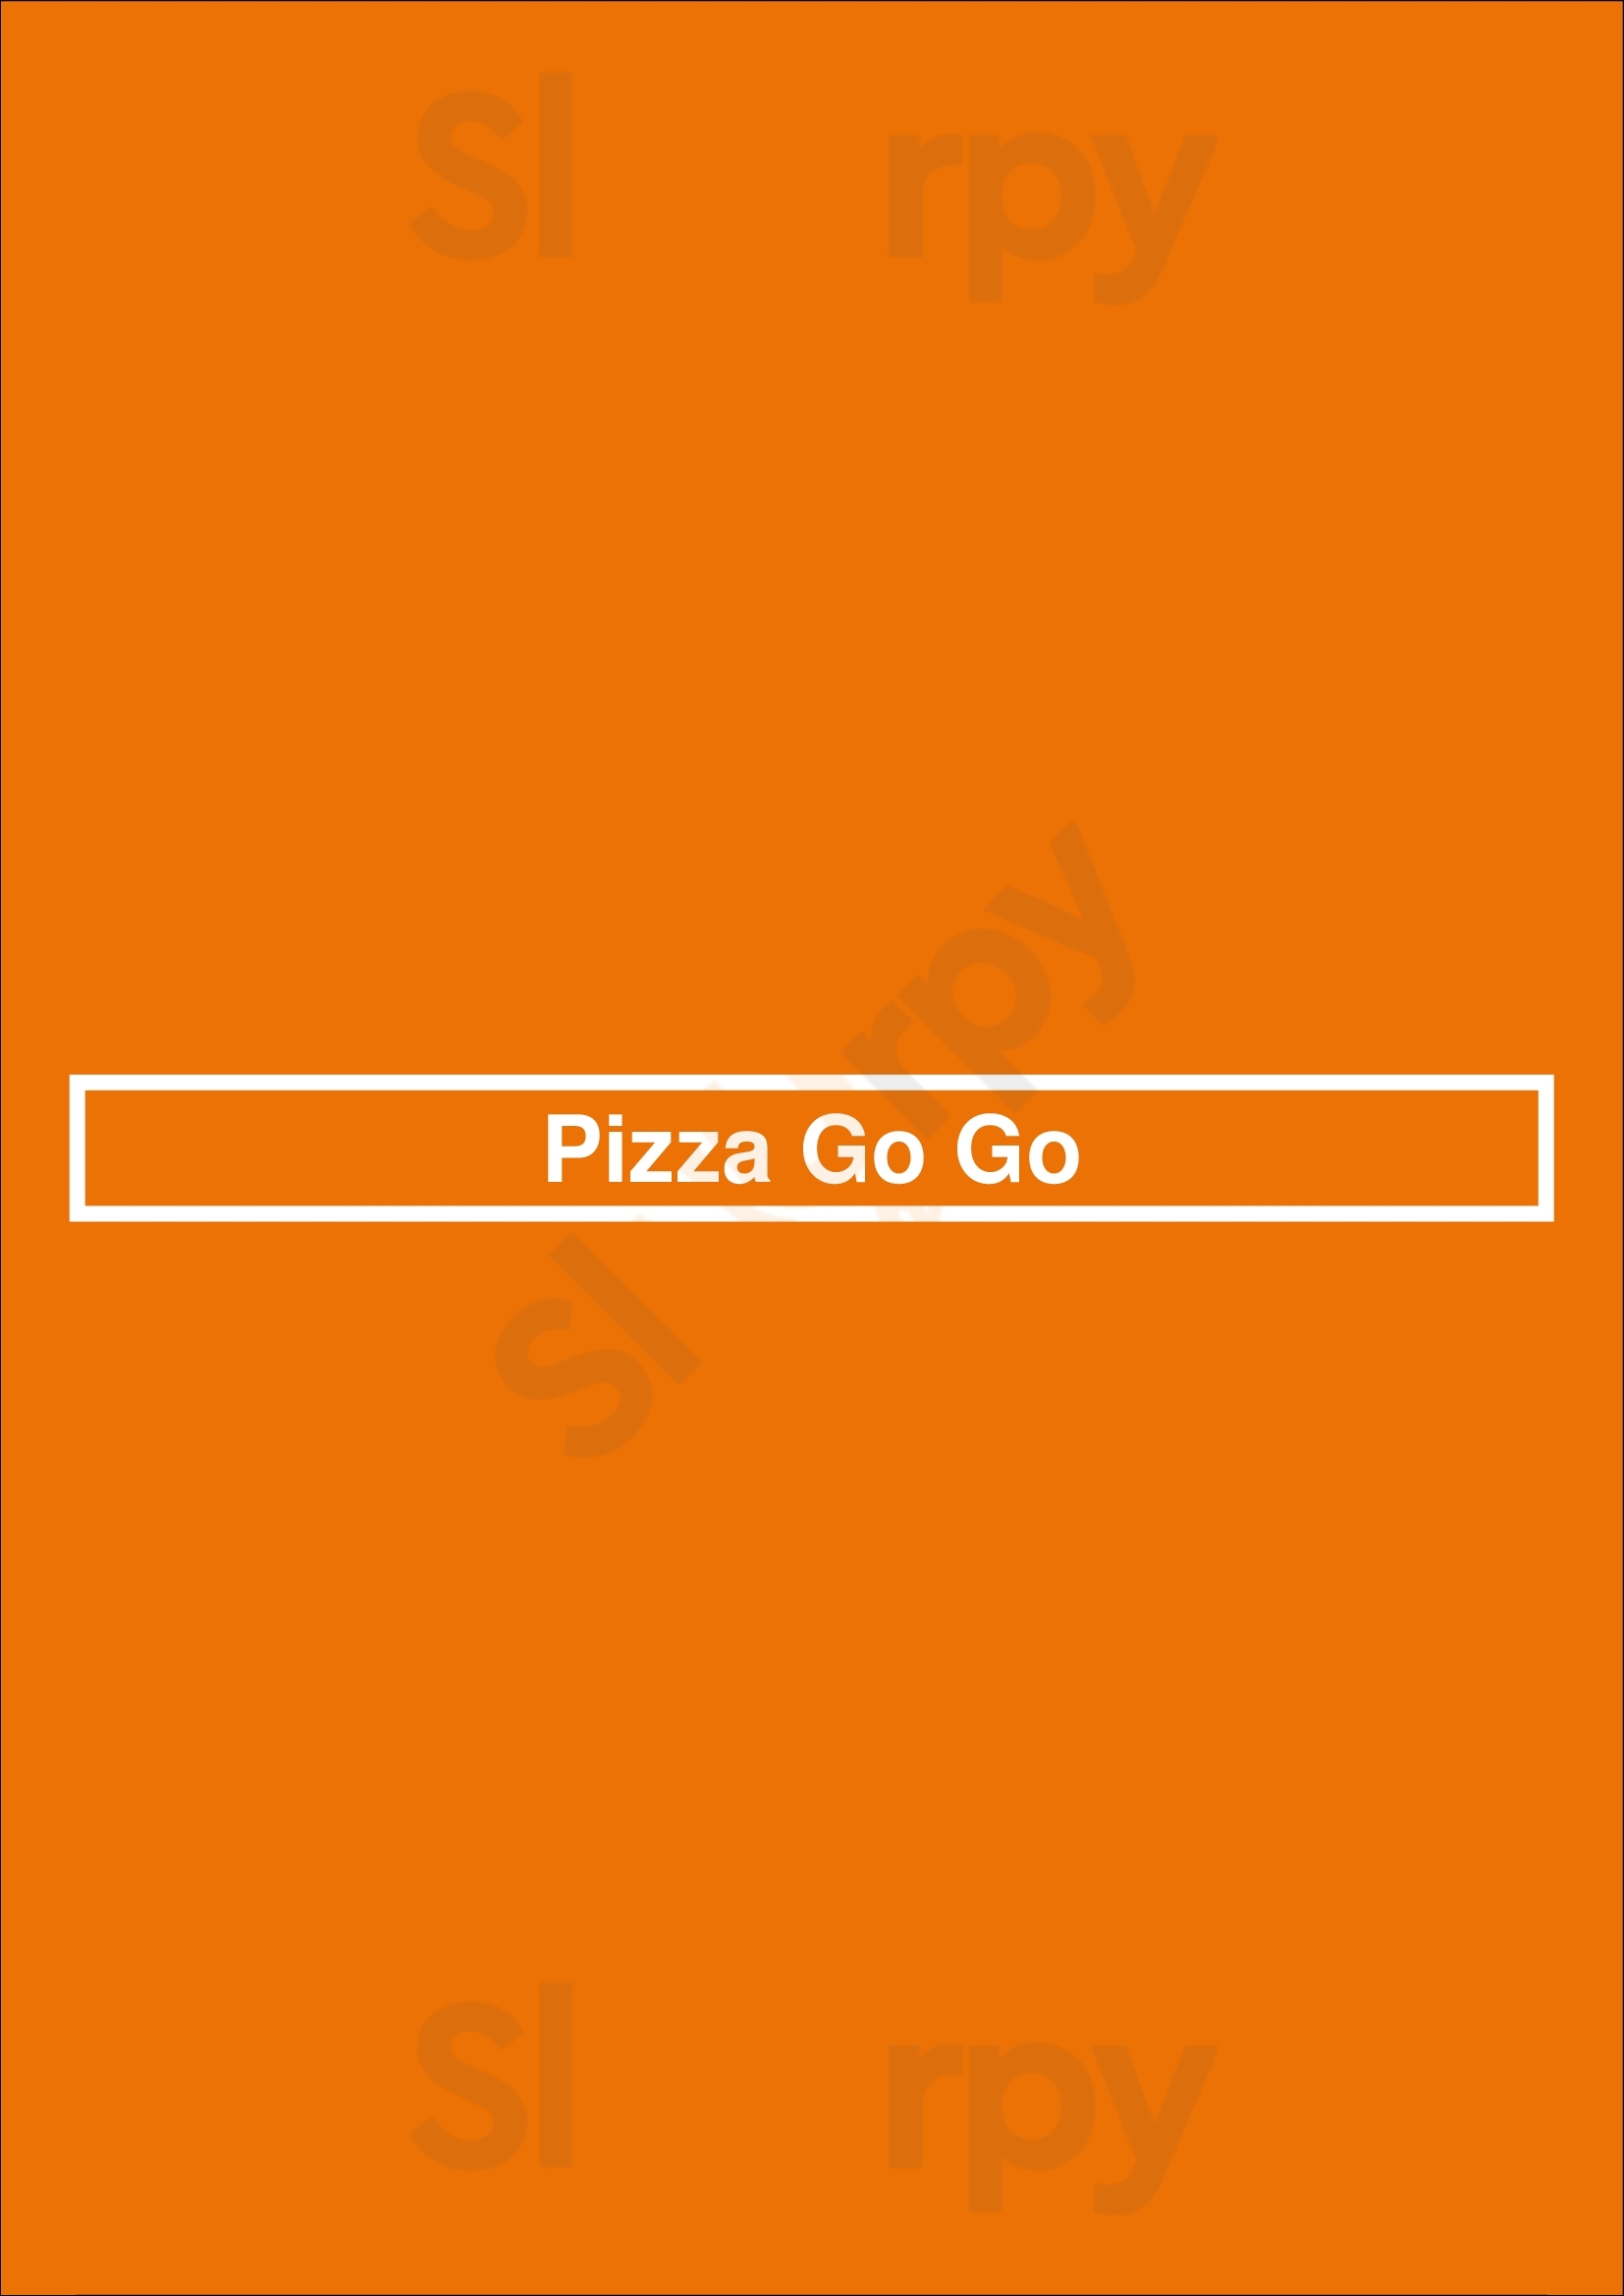 Pizza Go Go London Menu - 1